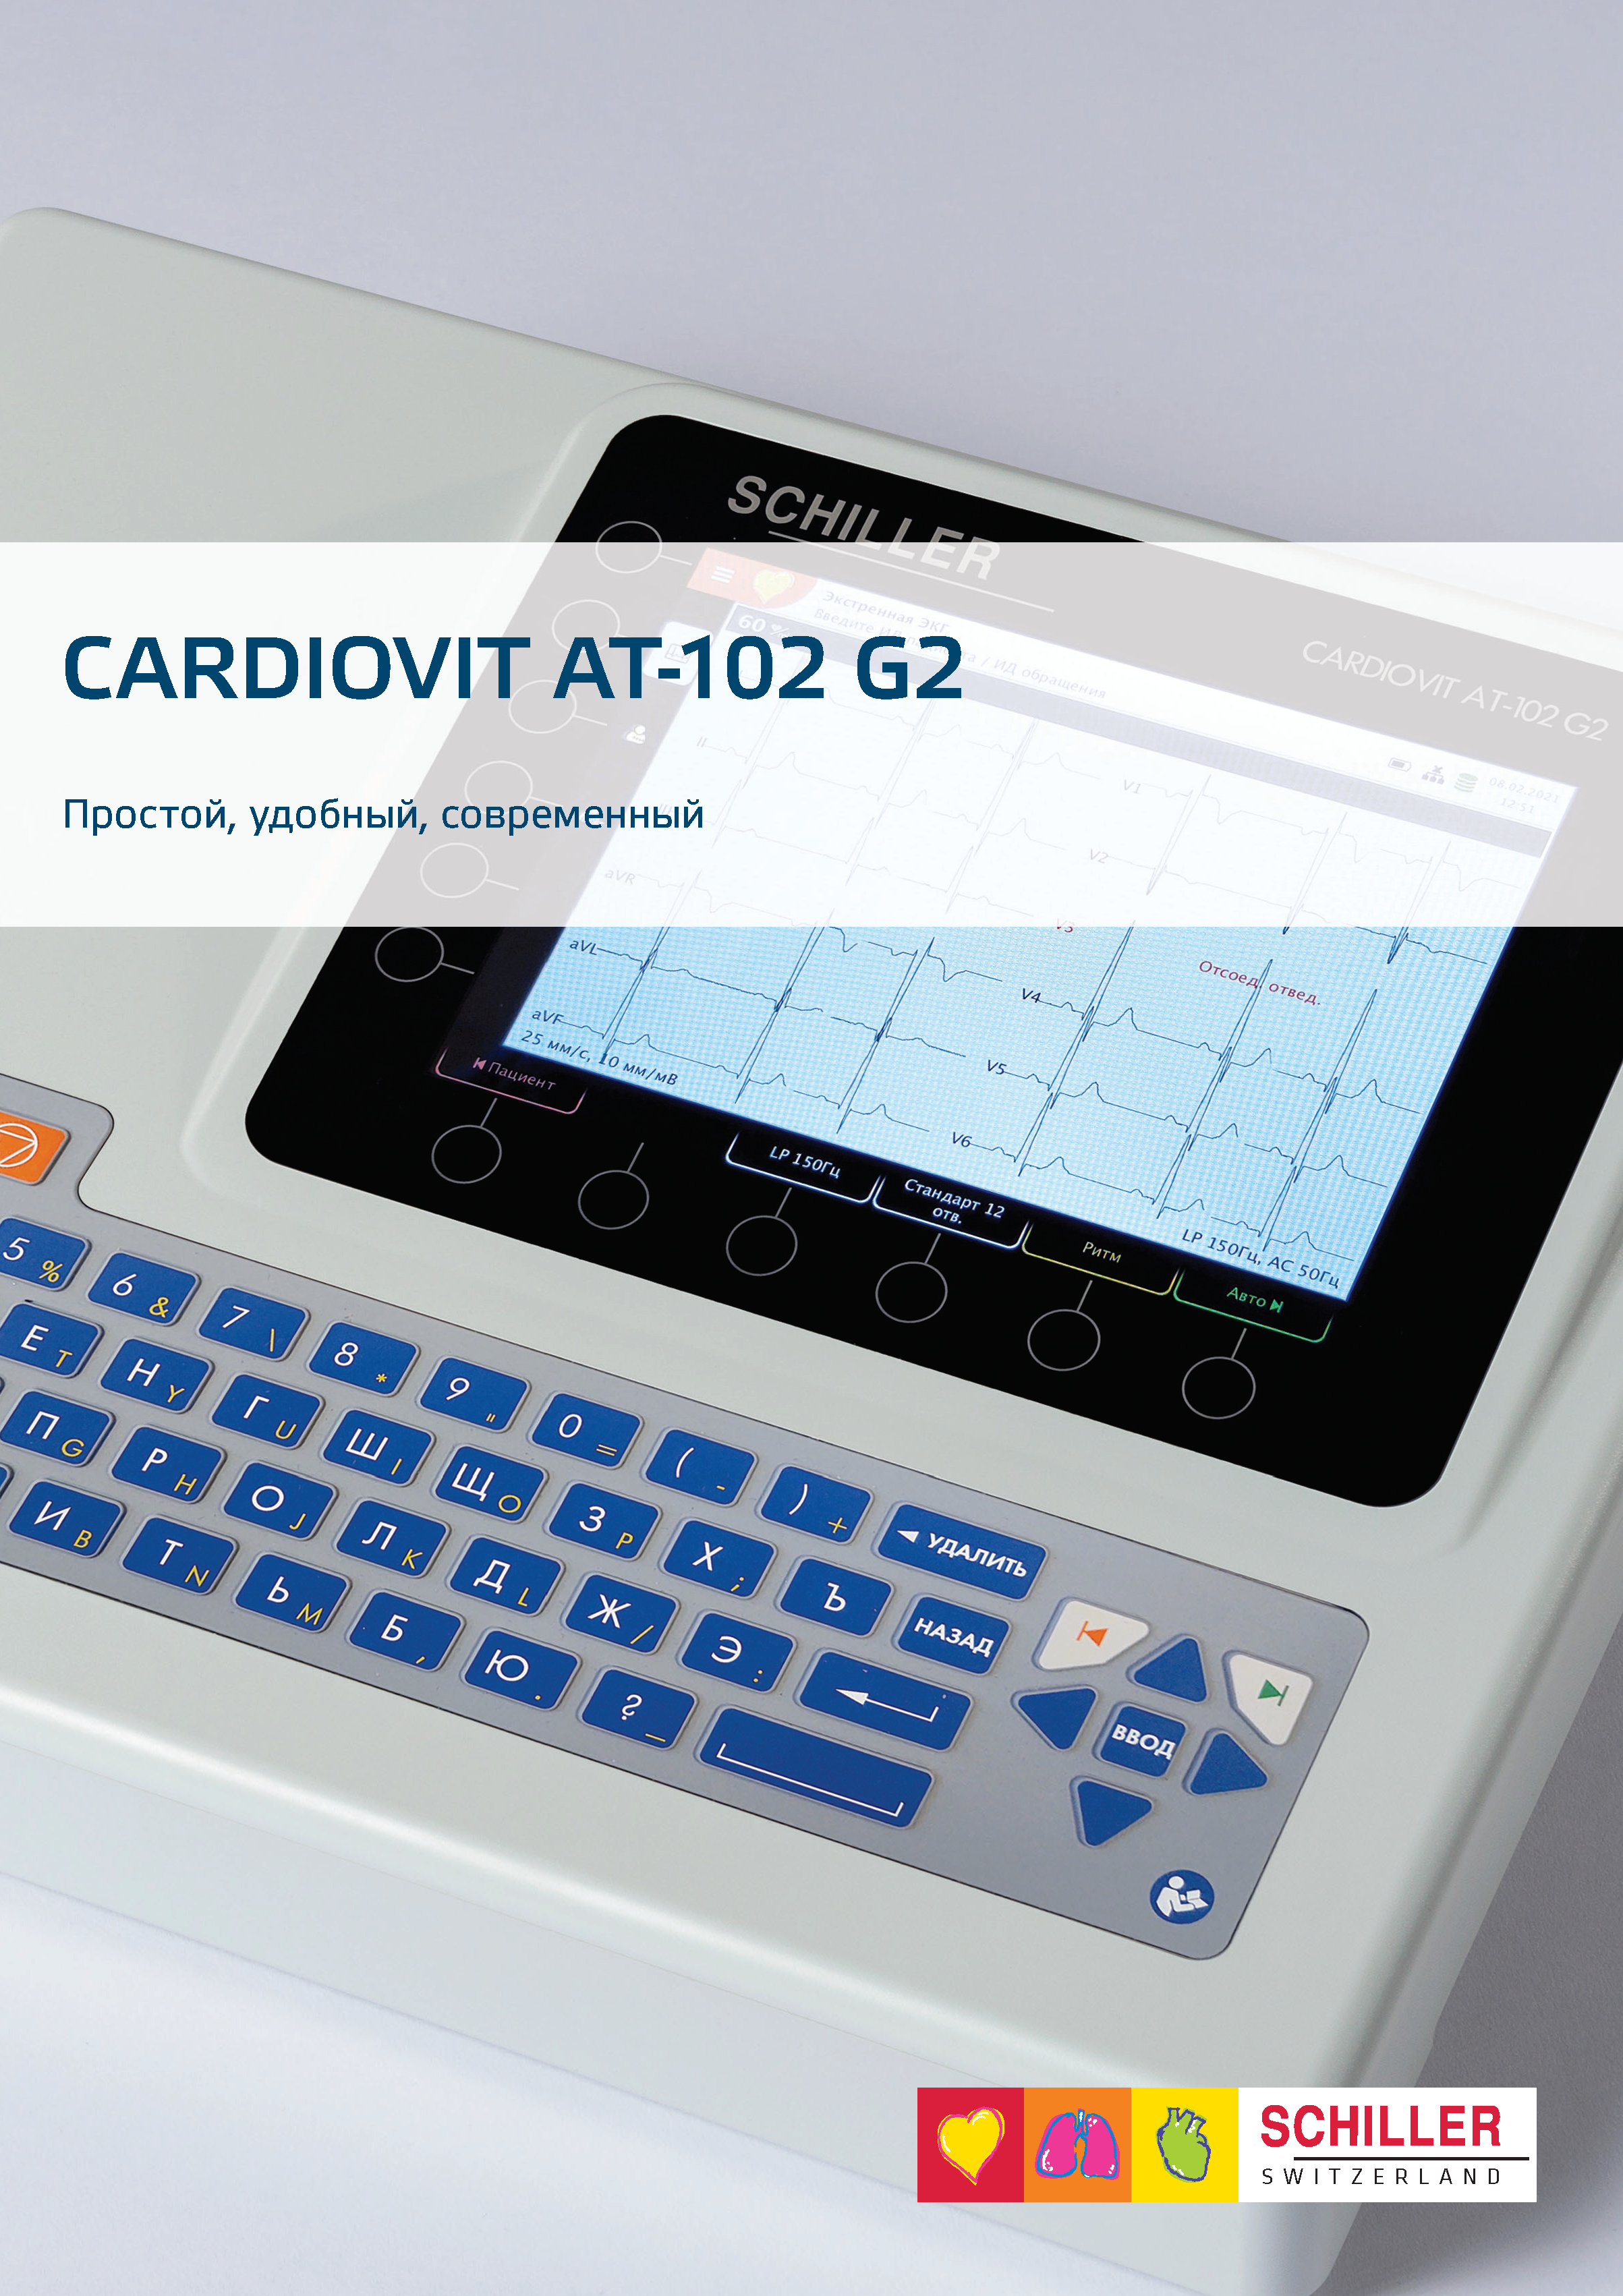 CARDIOVIT AT-102 G2